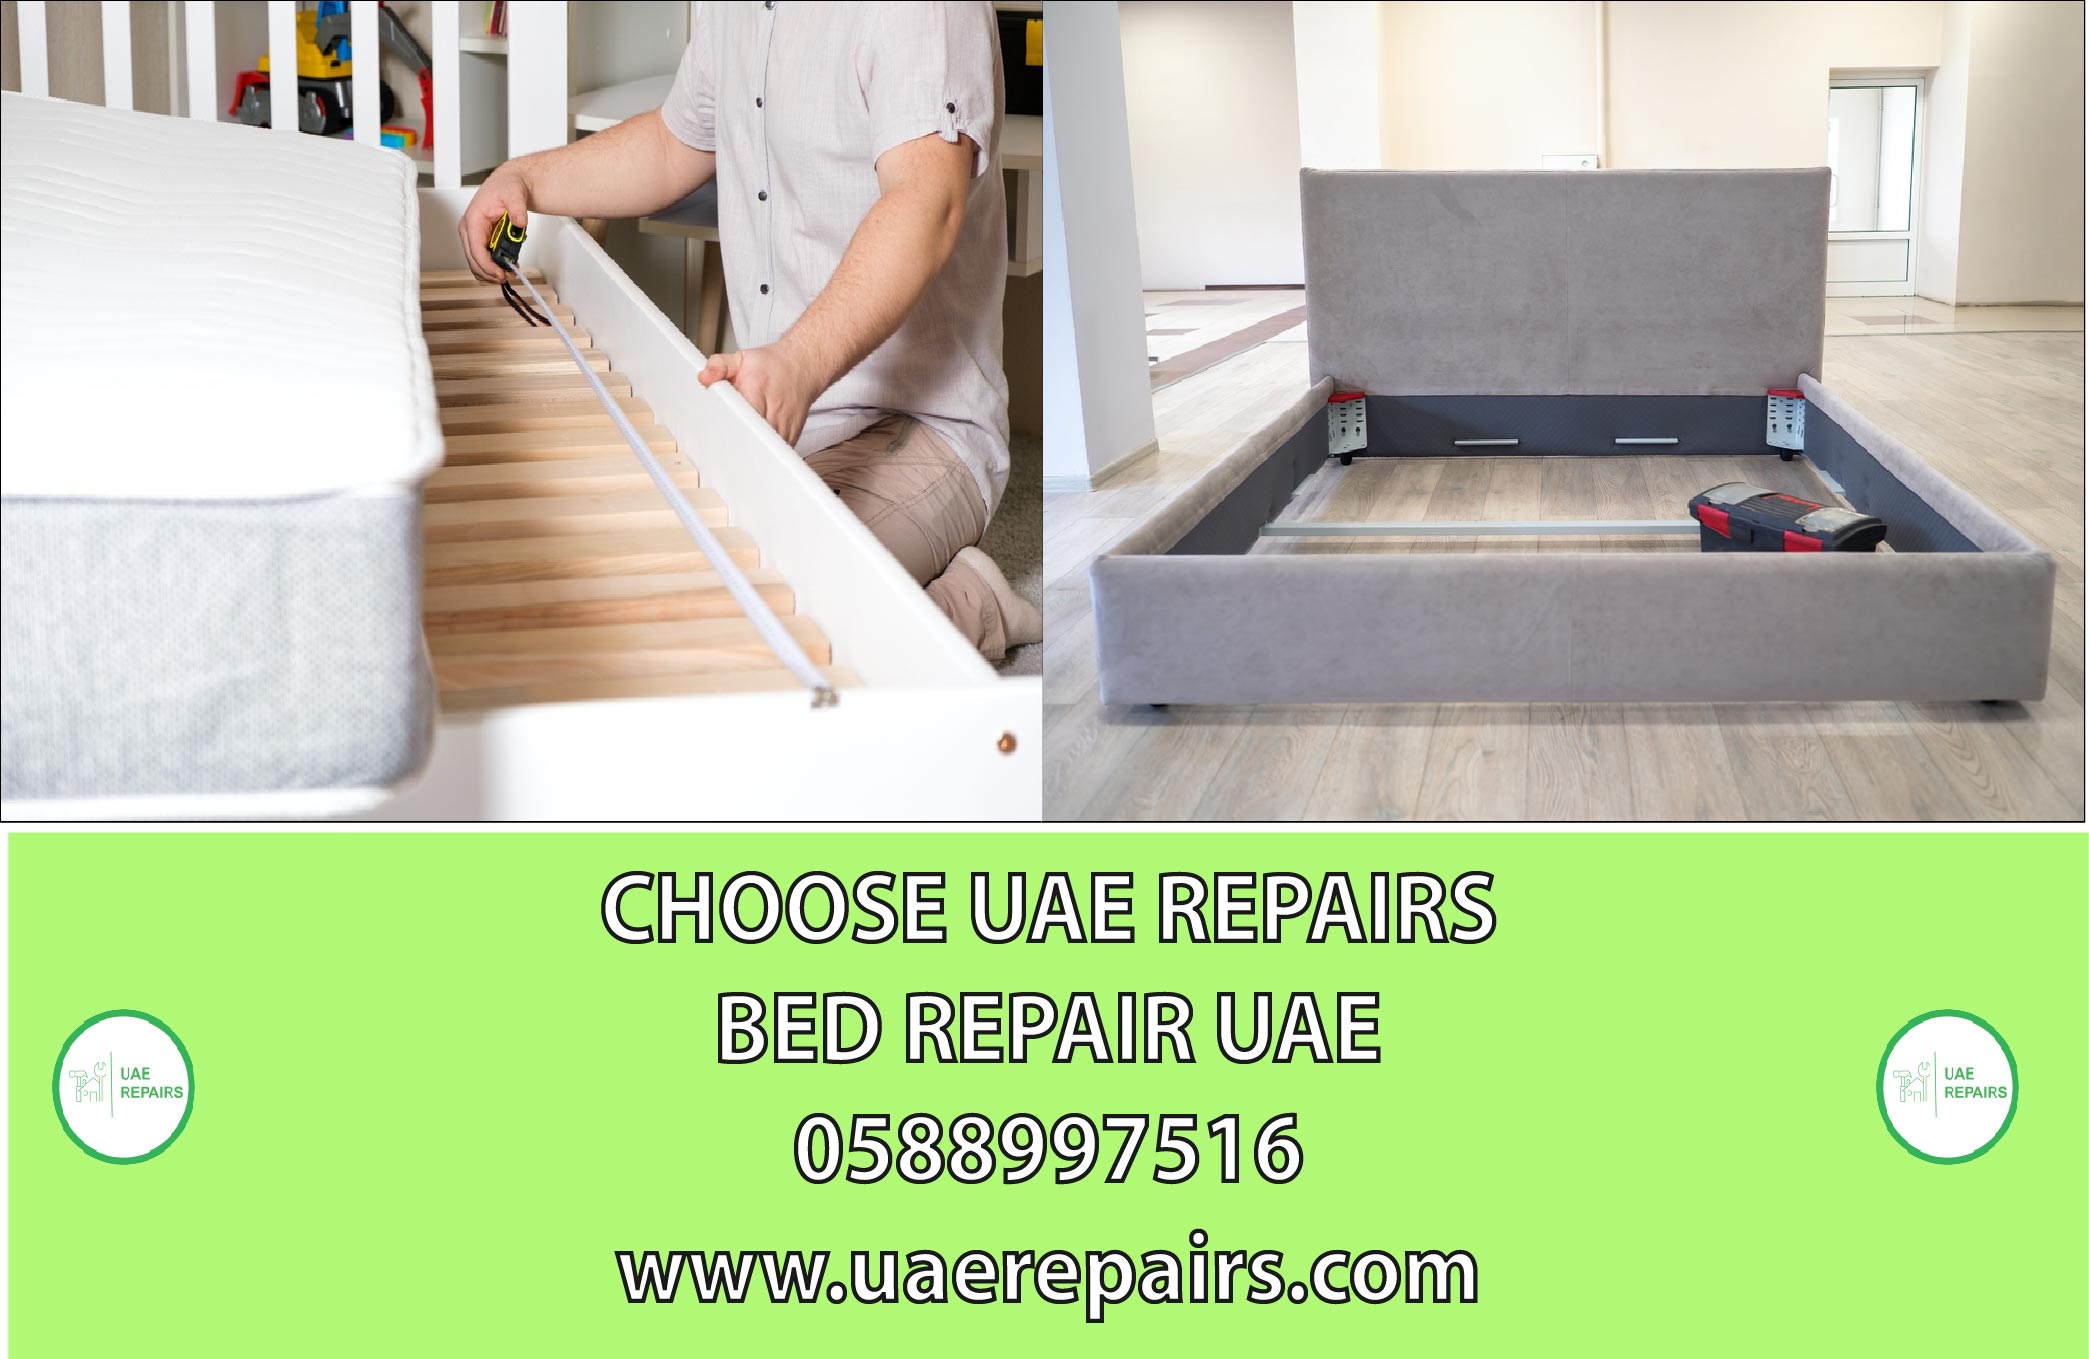 CHOOSE US FOR BED REPAIR UAE CONTACT US 0588997516